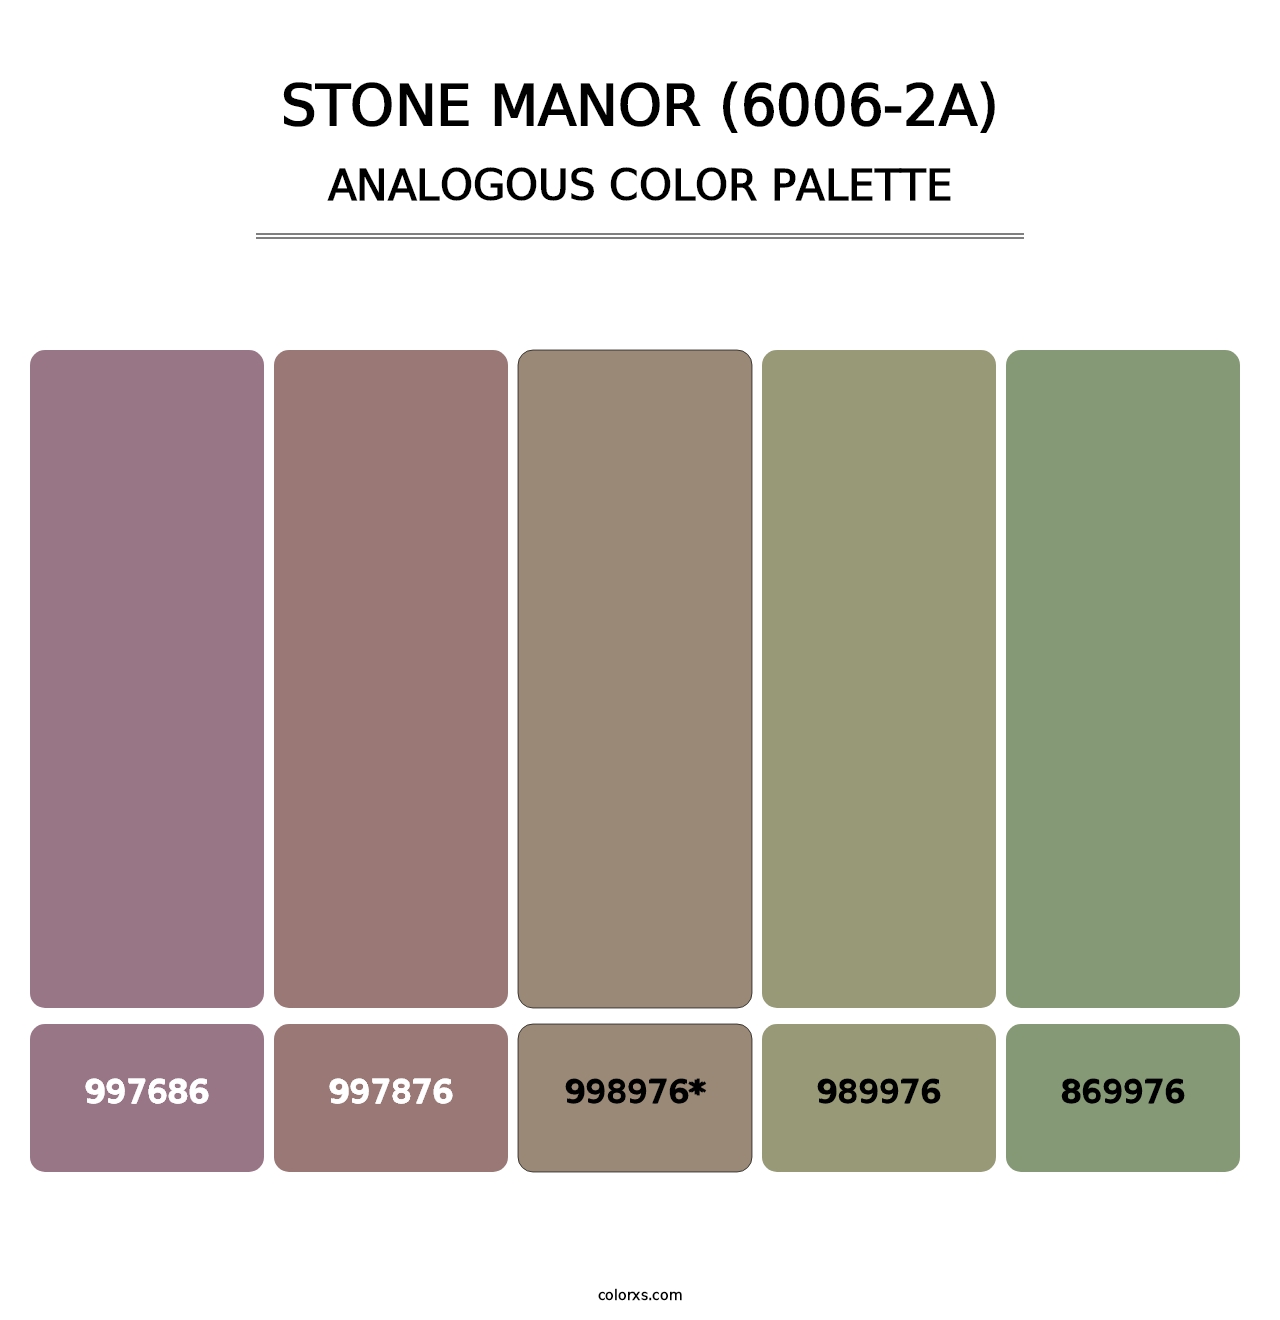 Stone Manor (6006-2A) - Analogous Color Palette